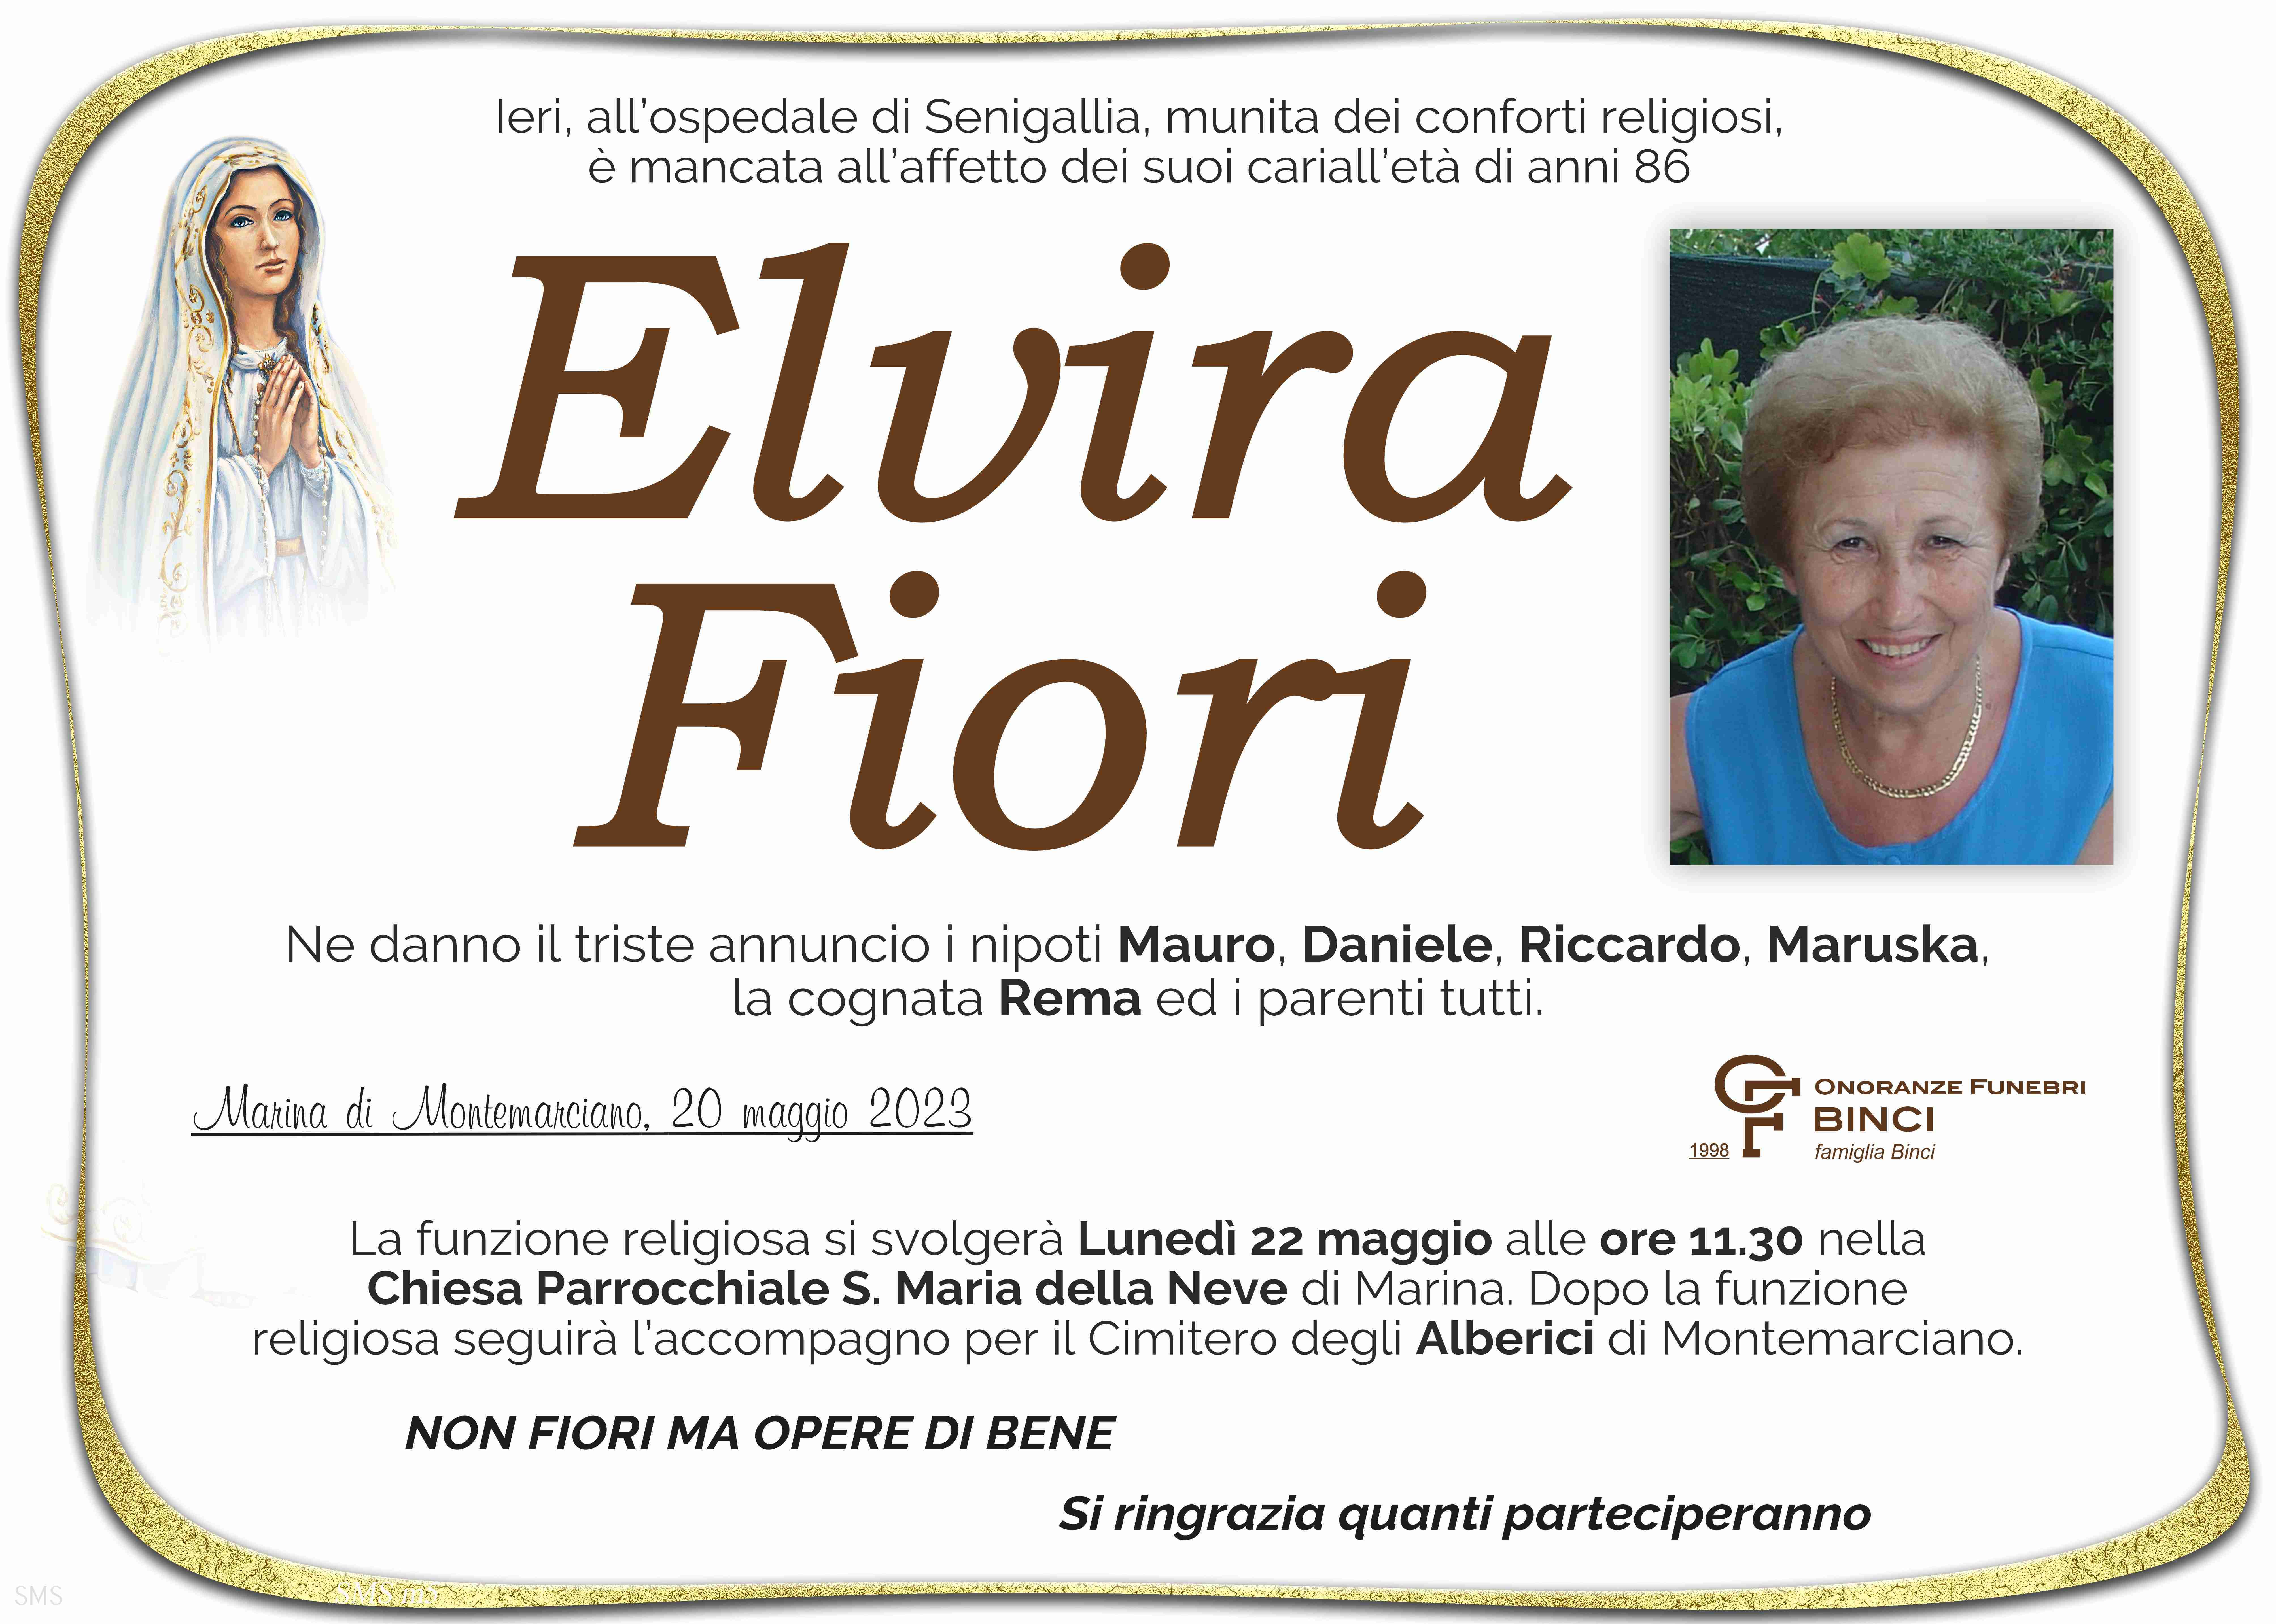 Elvira Fiori